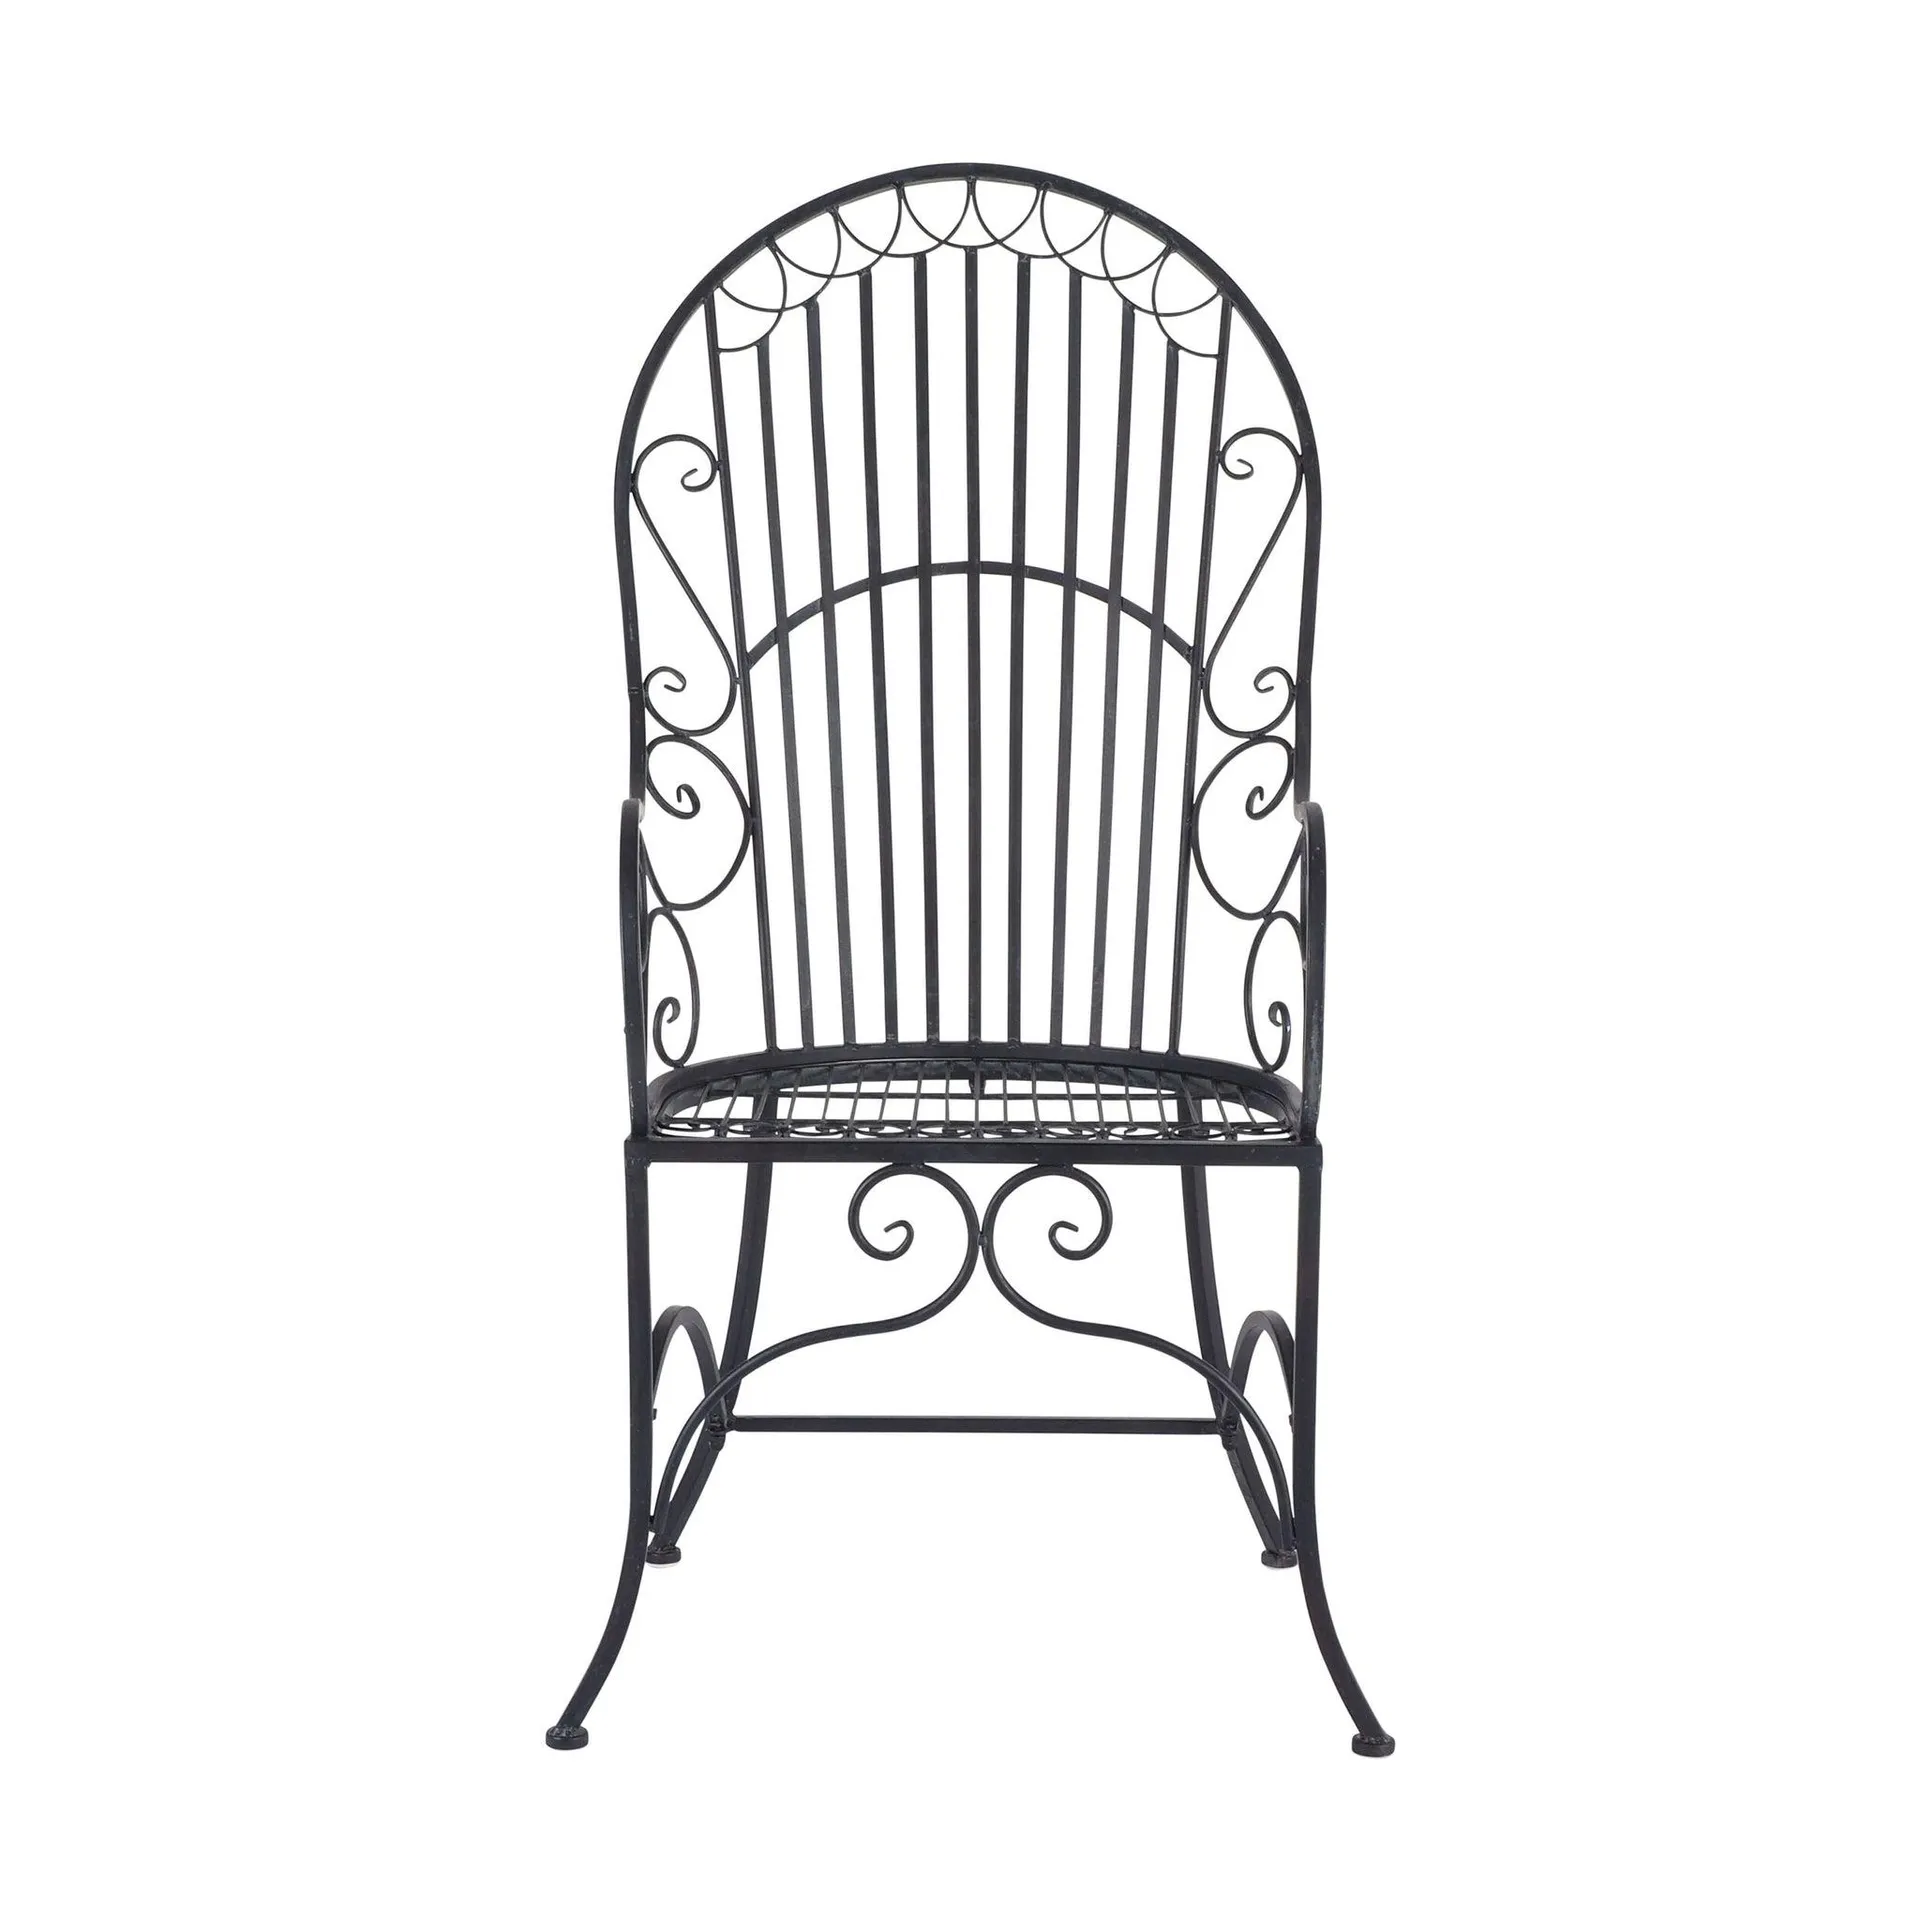 Arles Garden Chair Black